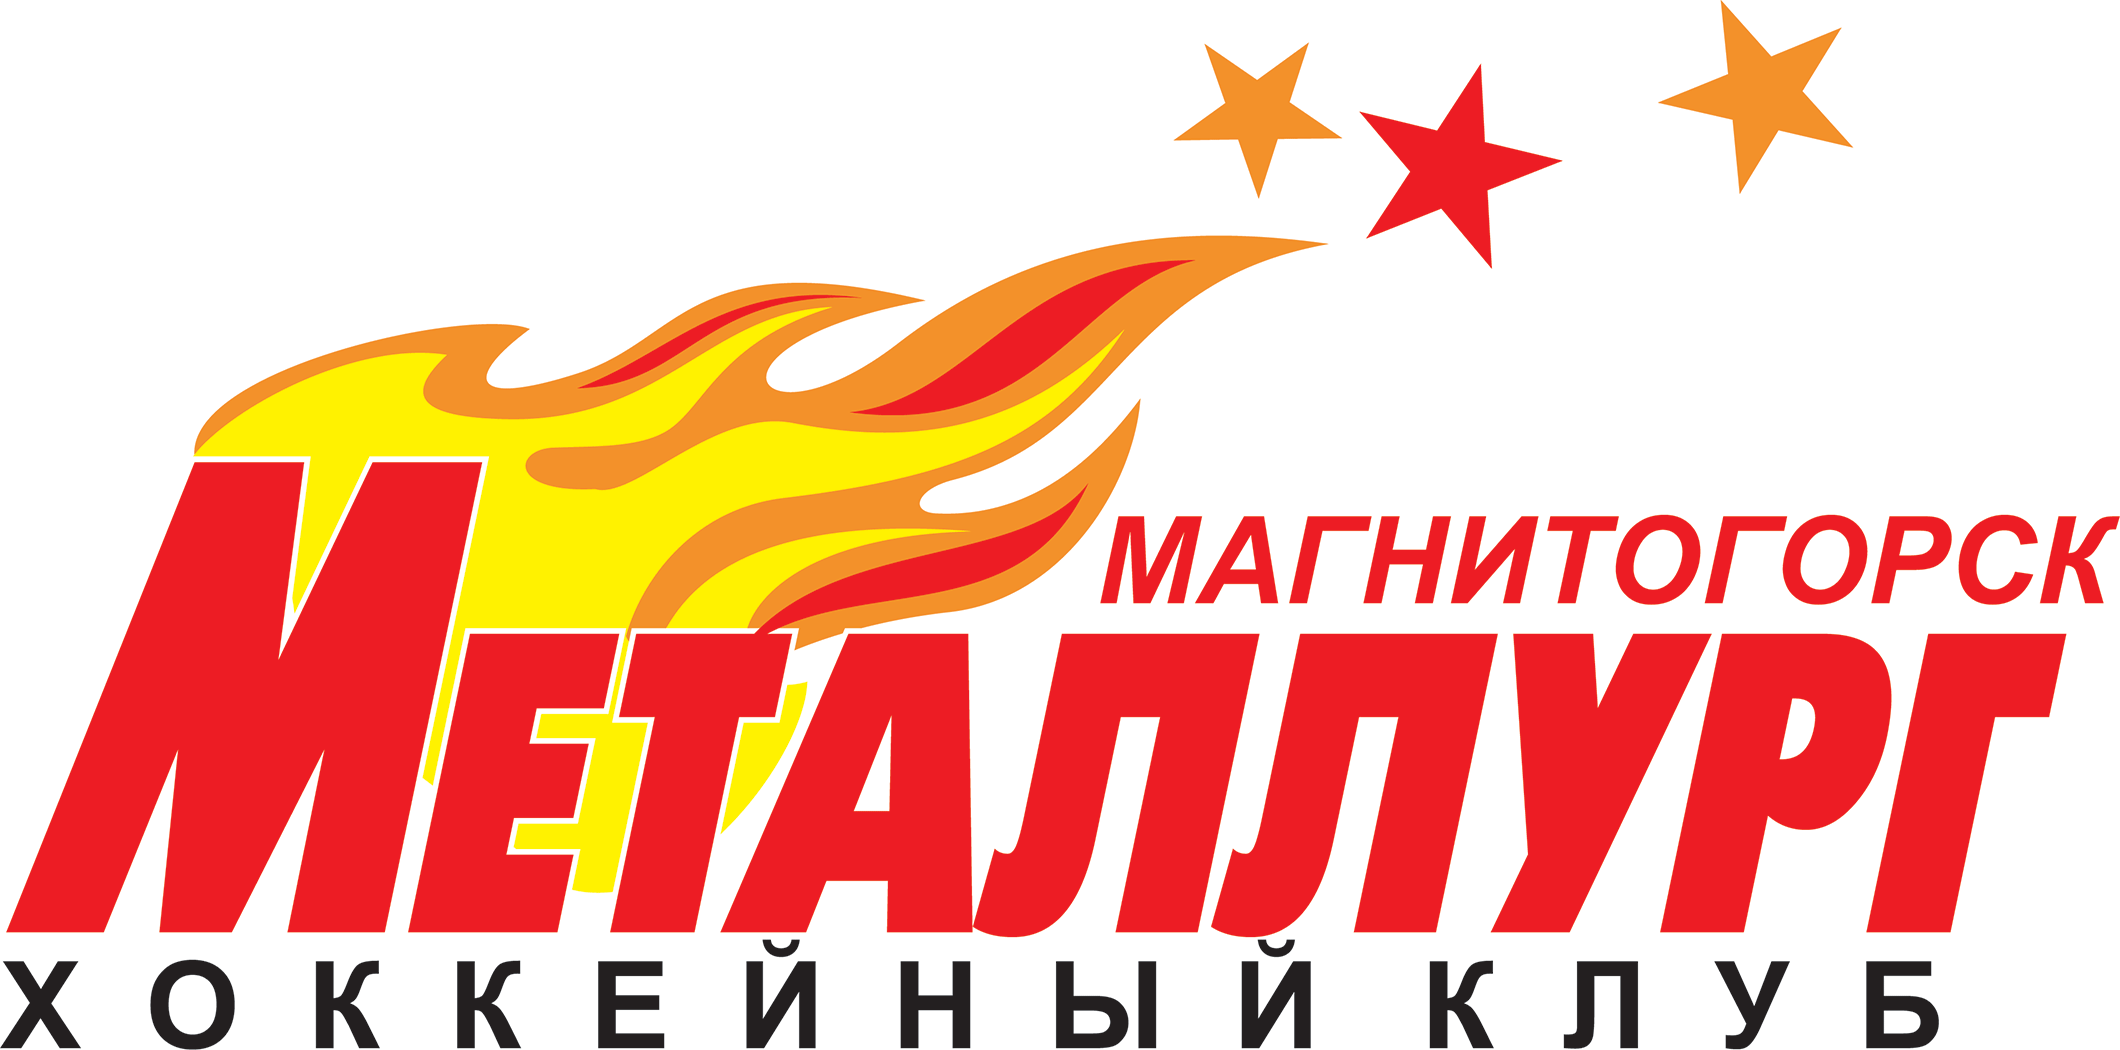 http://hockey-logo.ucoz.com/russia/metallurg-magnitogorsk.gif